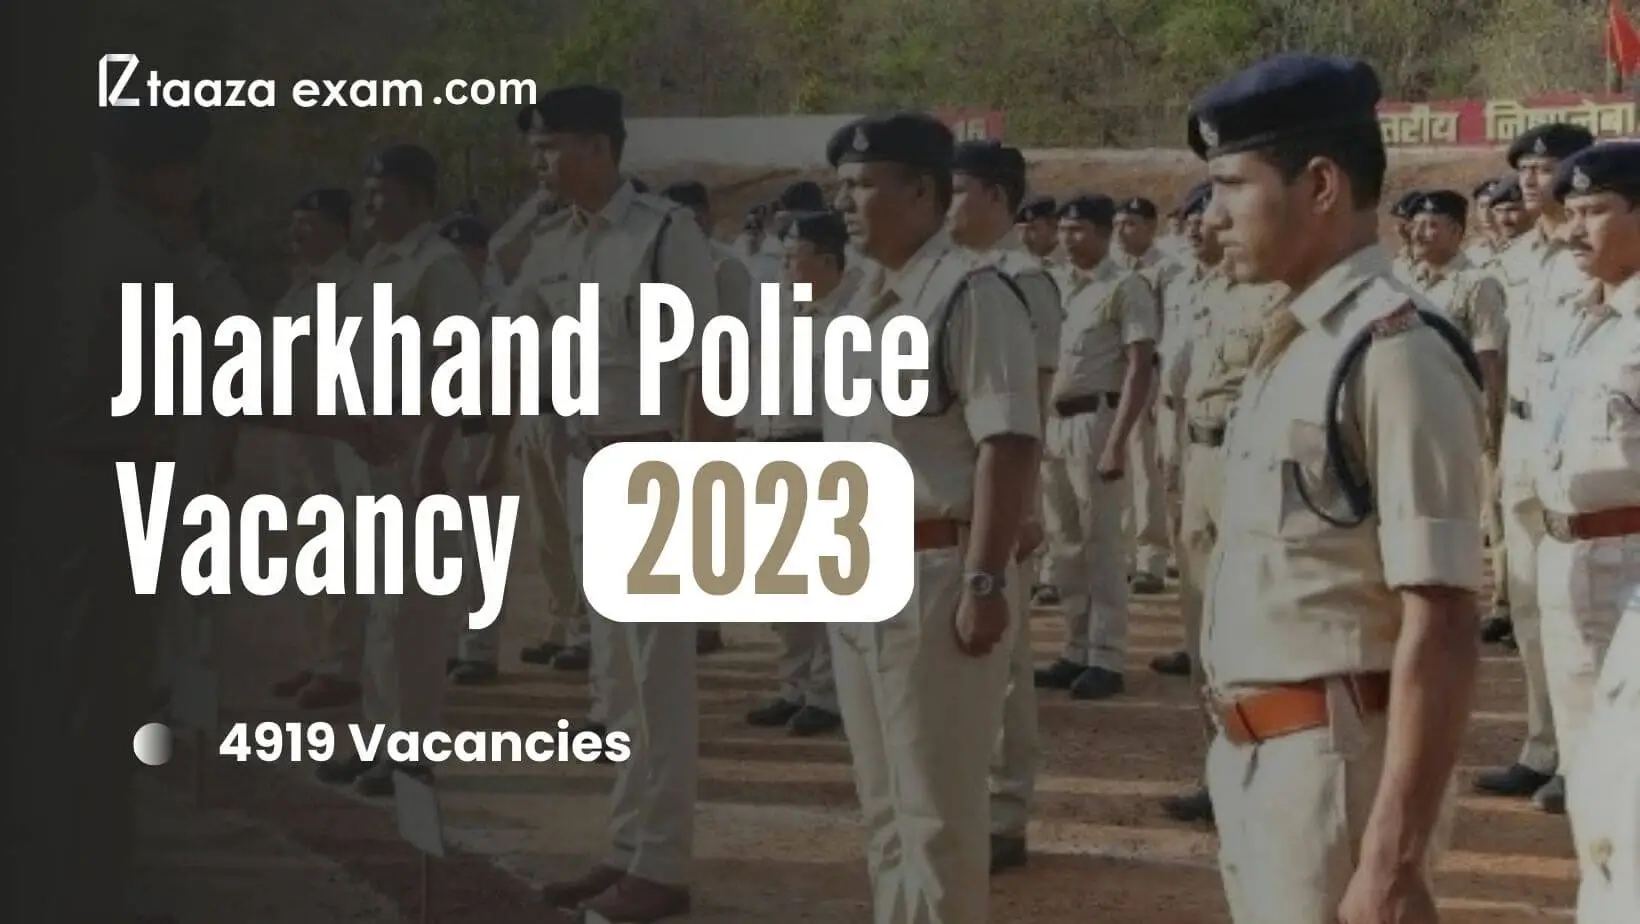 jharkhand police vacancy 2023 Notification, Job Profile, Sallary, Exam Syllabus, Education and Age Eligibility